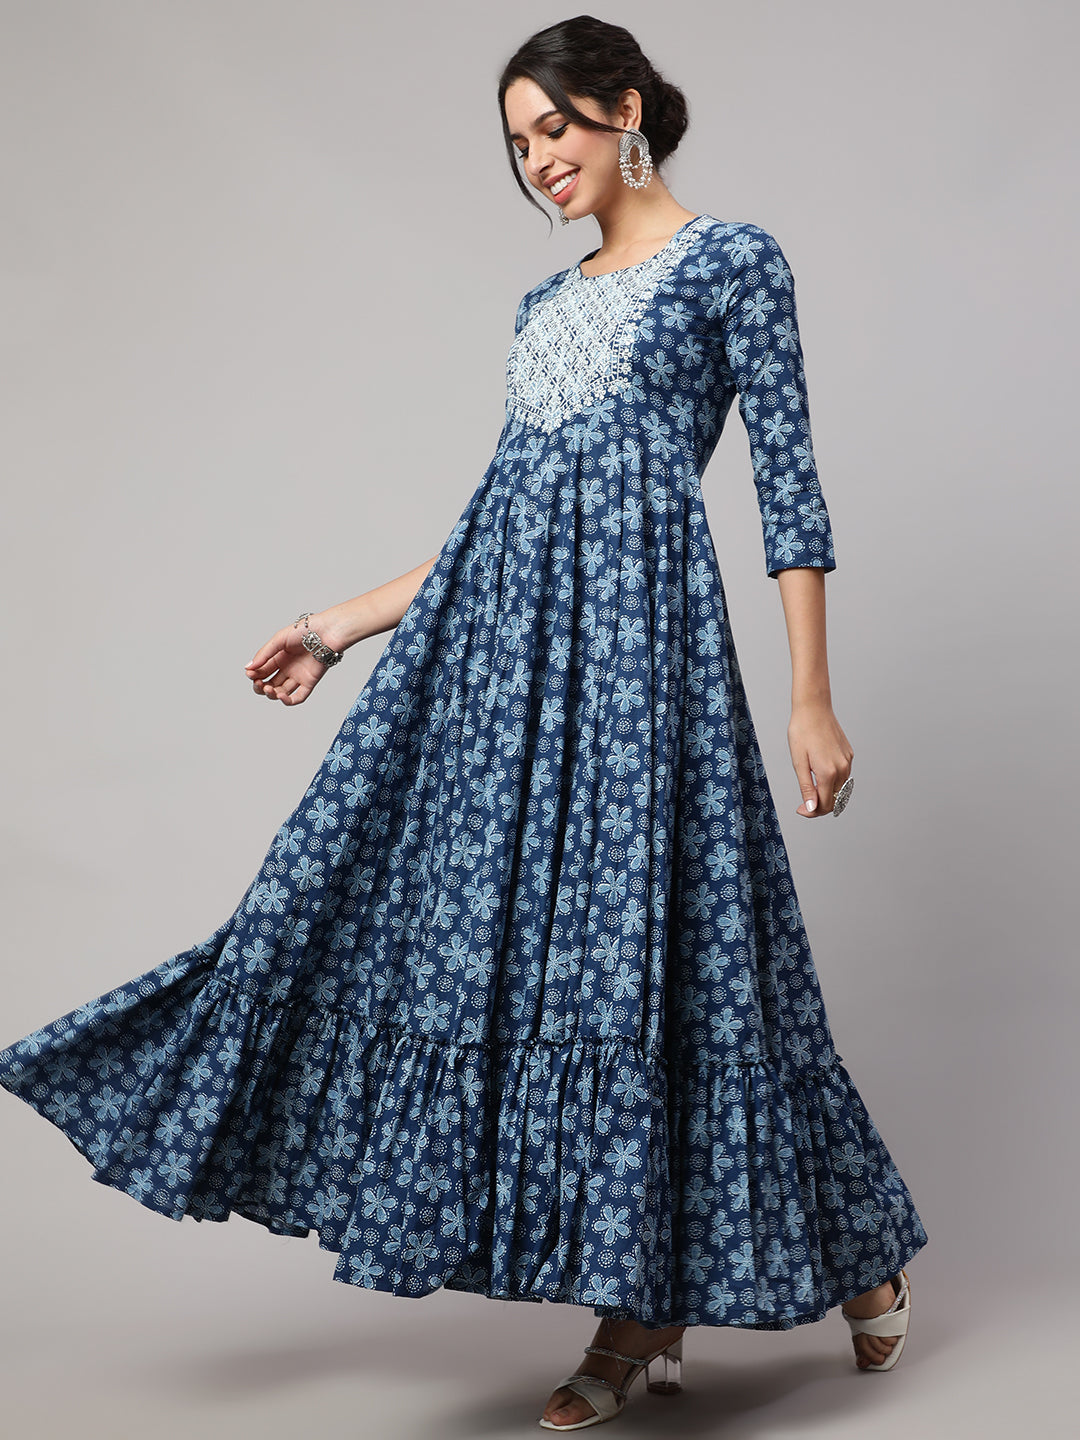 Cotton Floral Print Ethnic Wear Summer Dress For Women, Sleeveless Midi  Dress | eBay